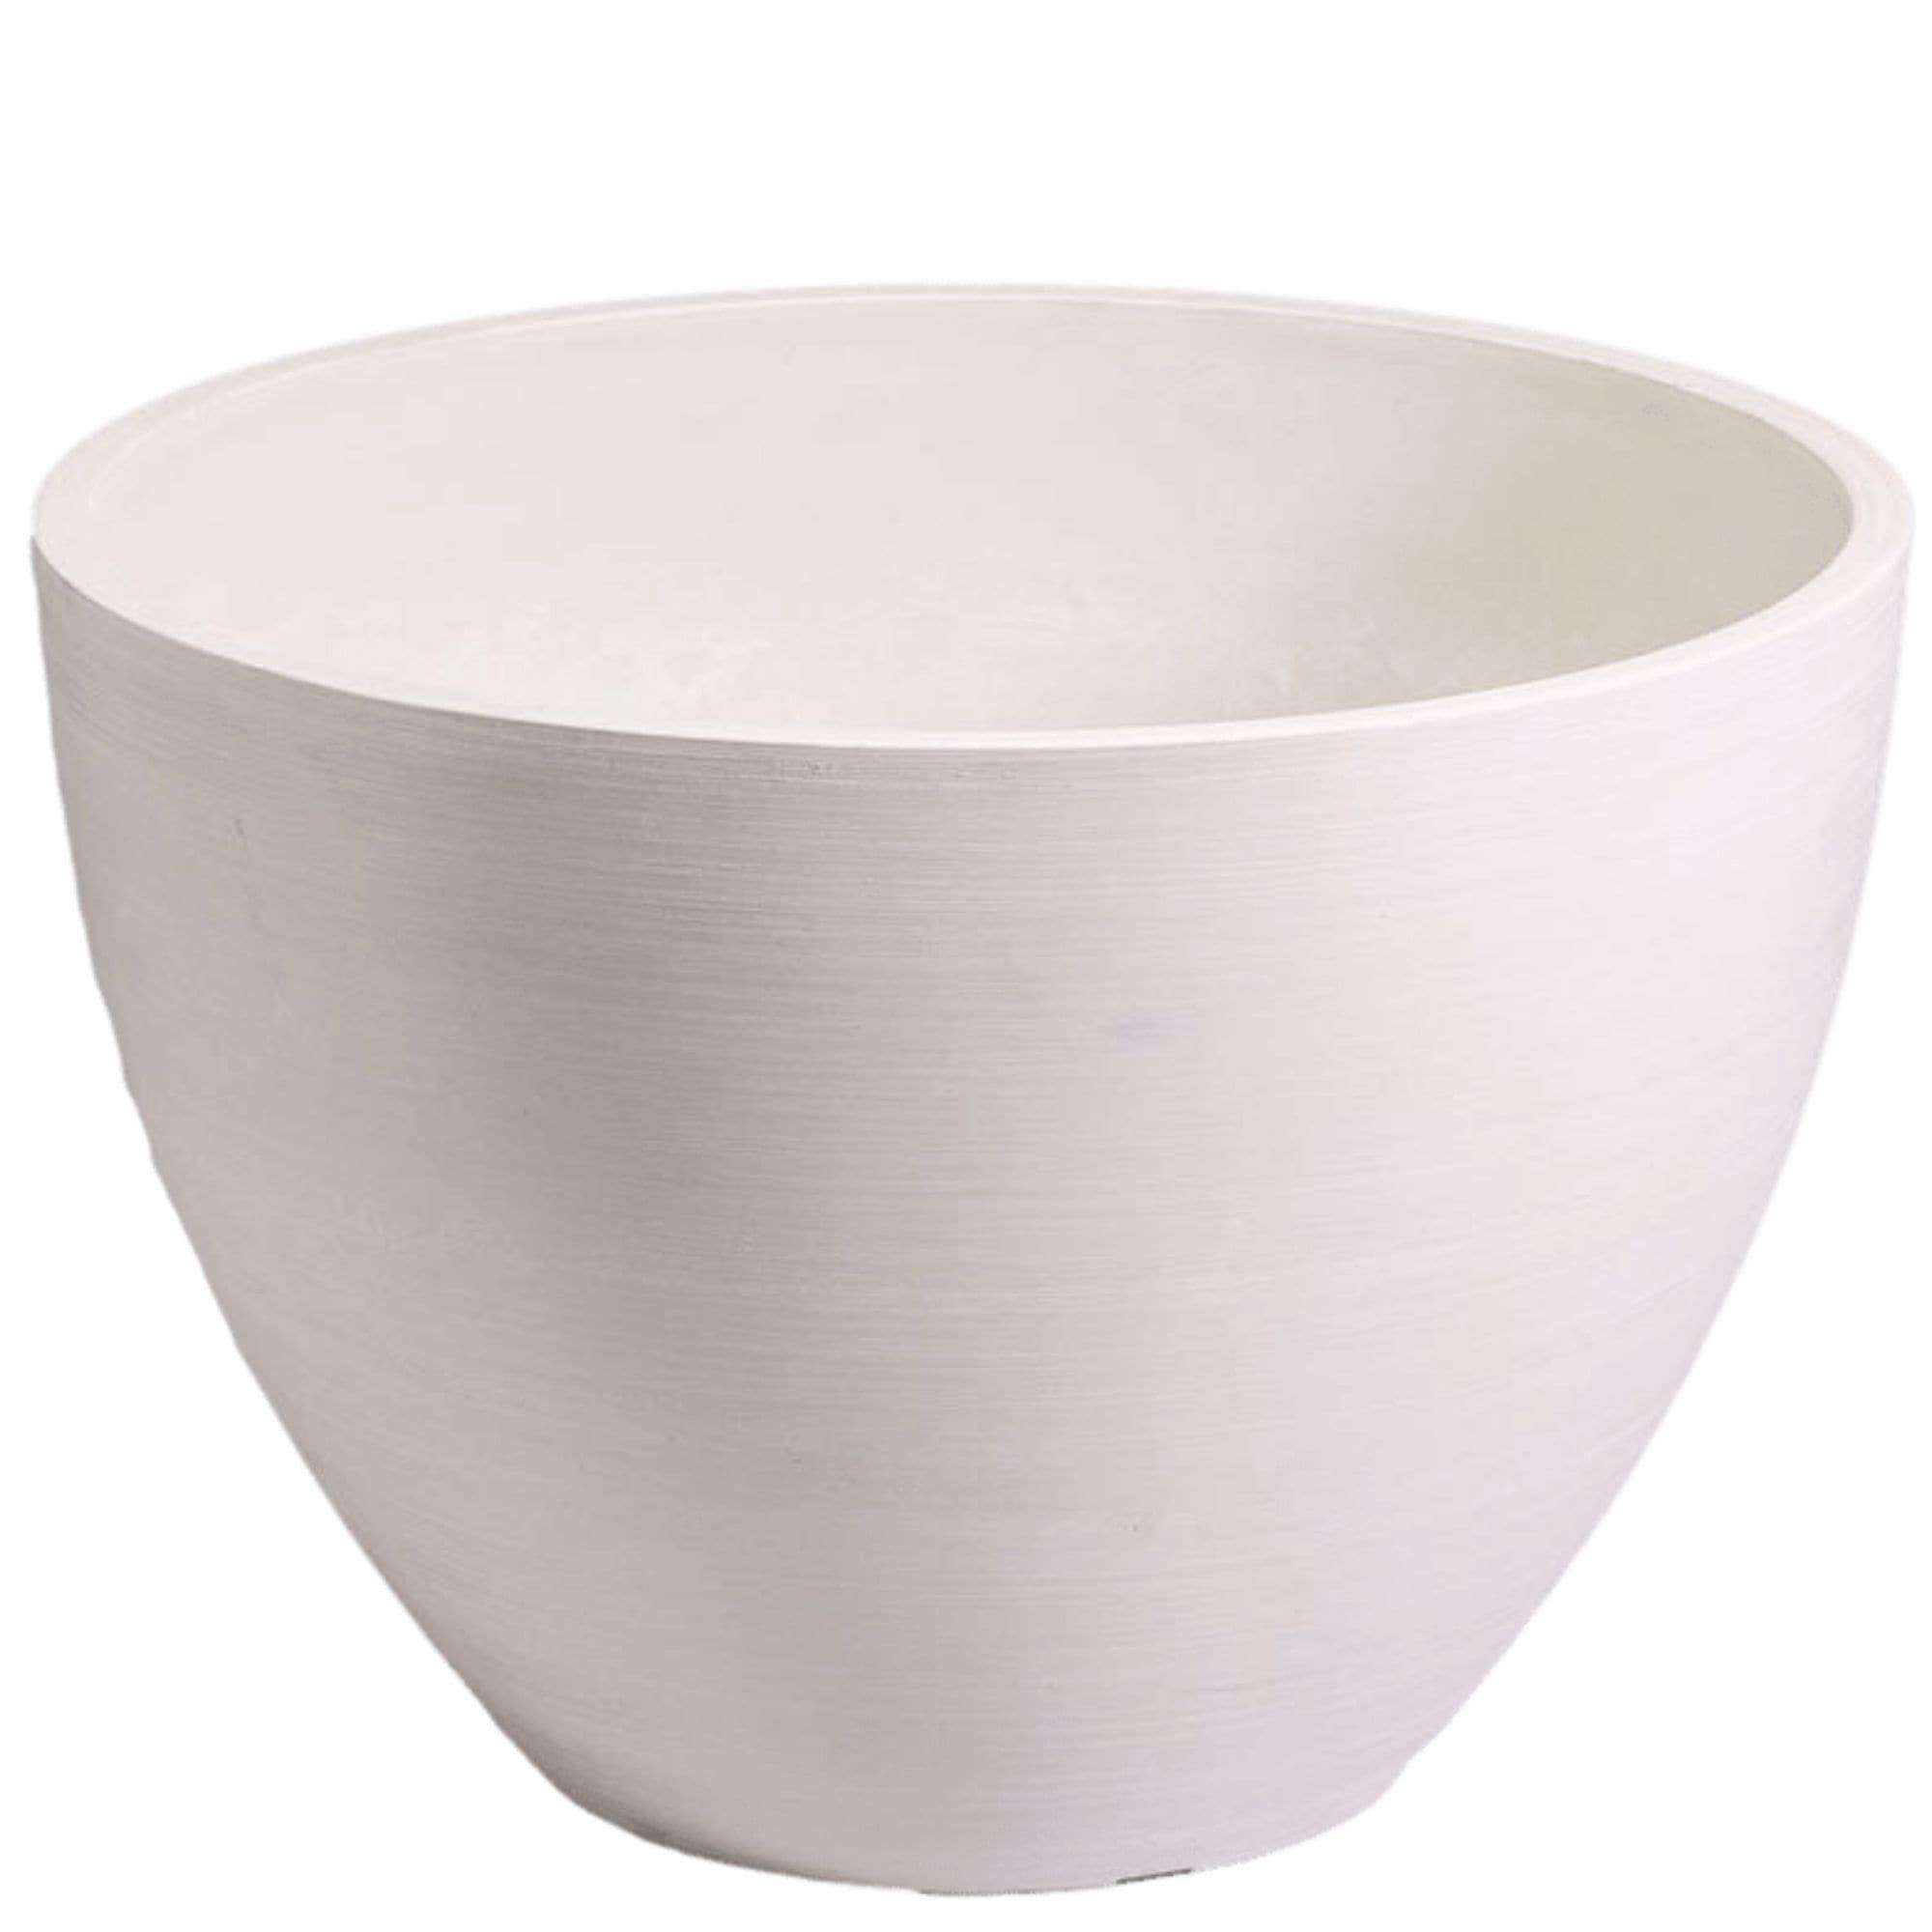 polished-vintage-white-planter-bowl-30cm-710169.jpg